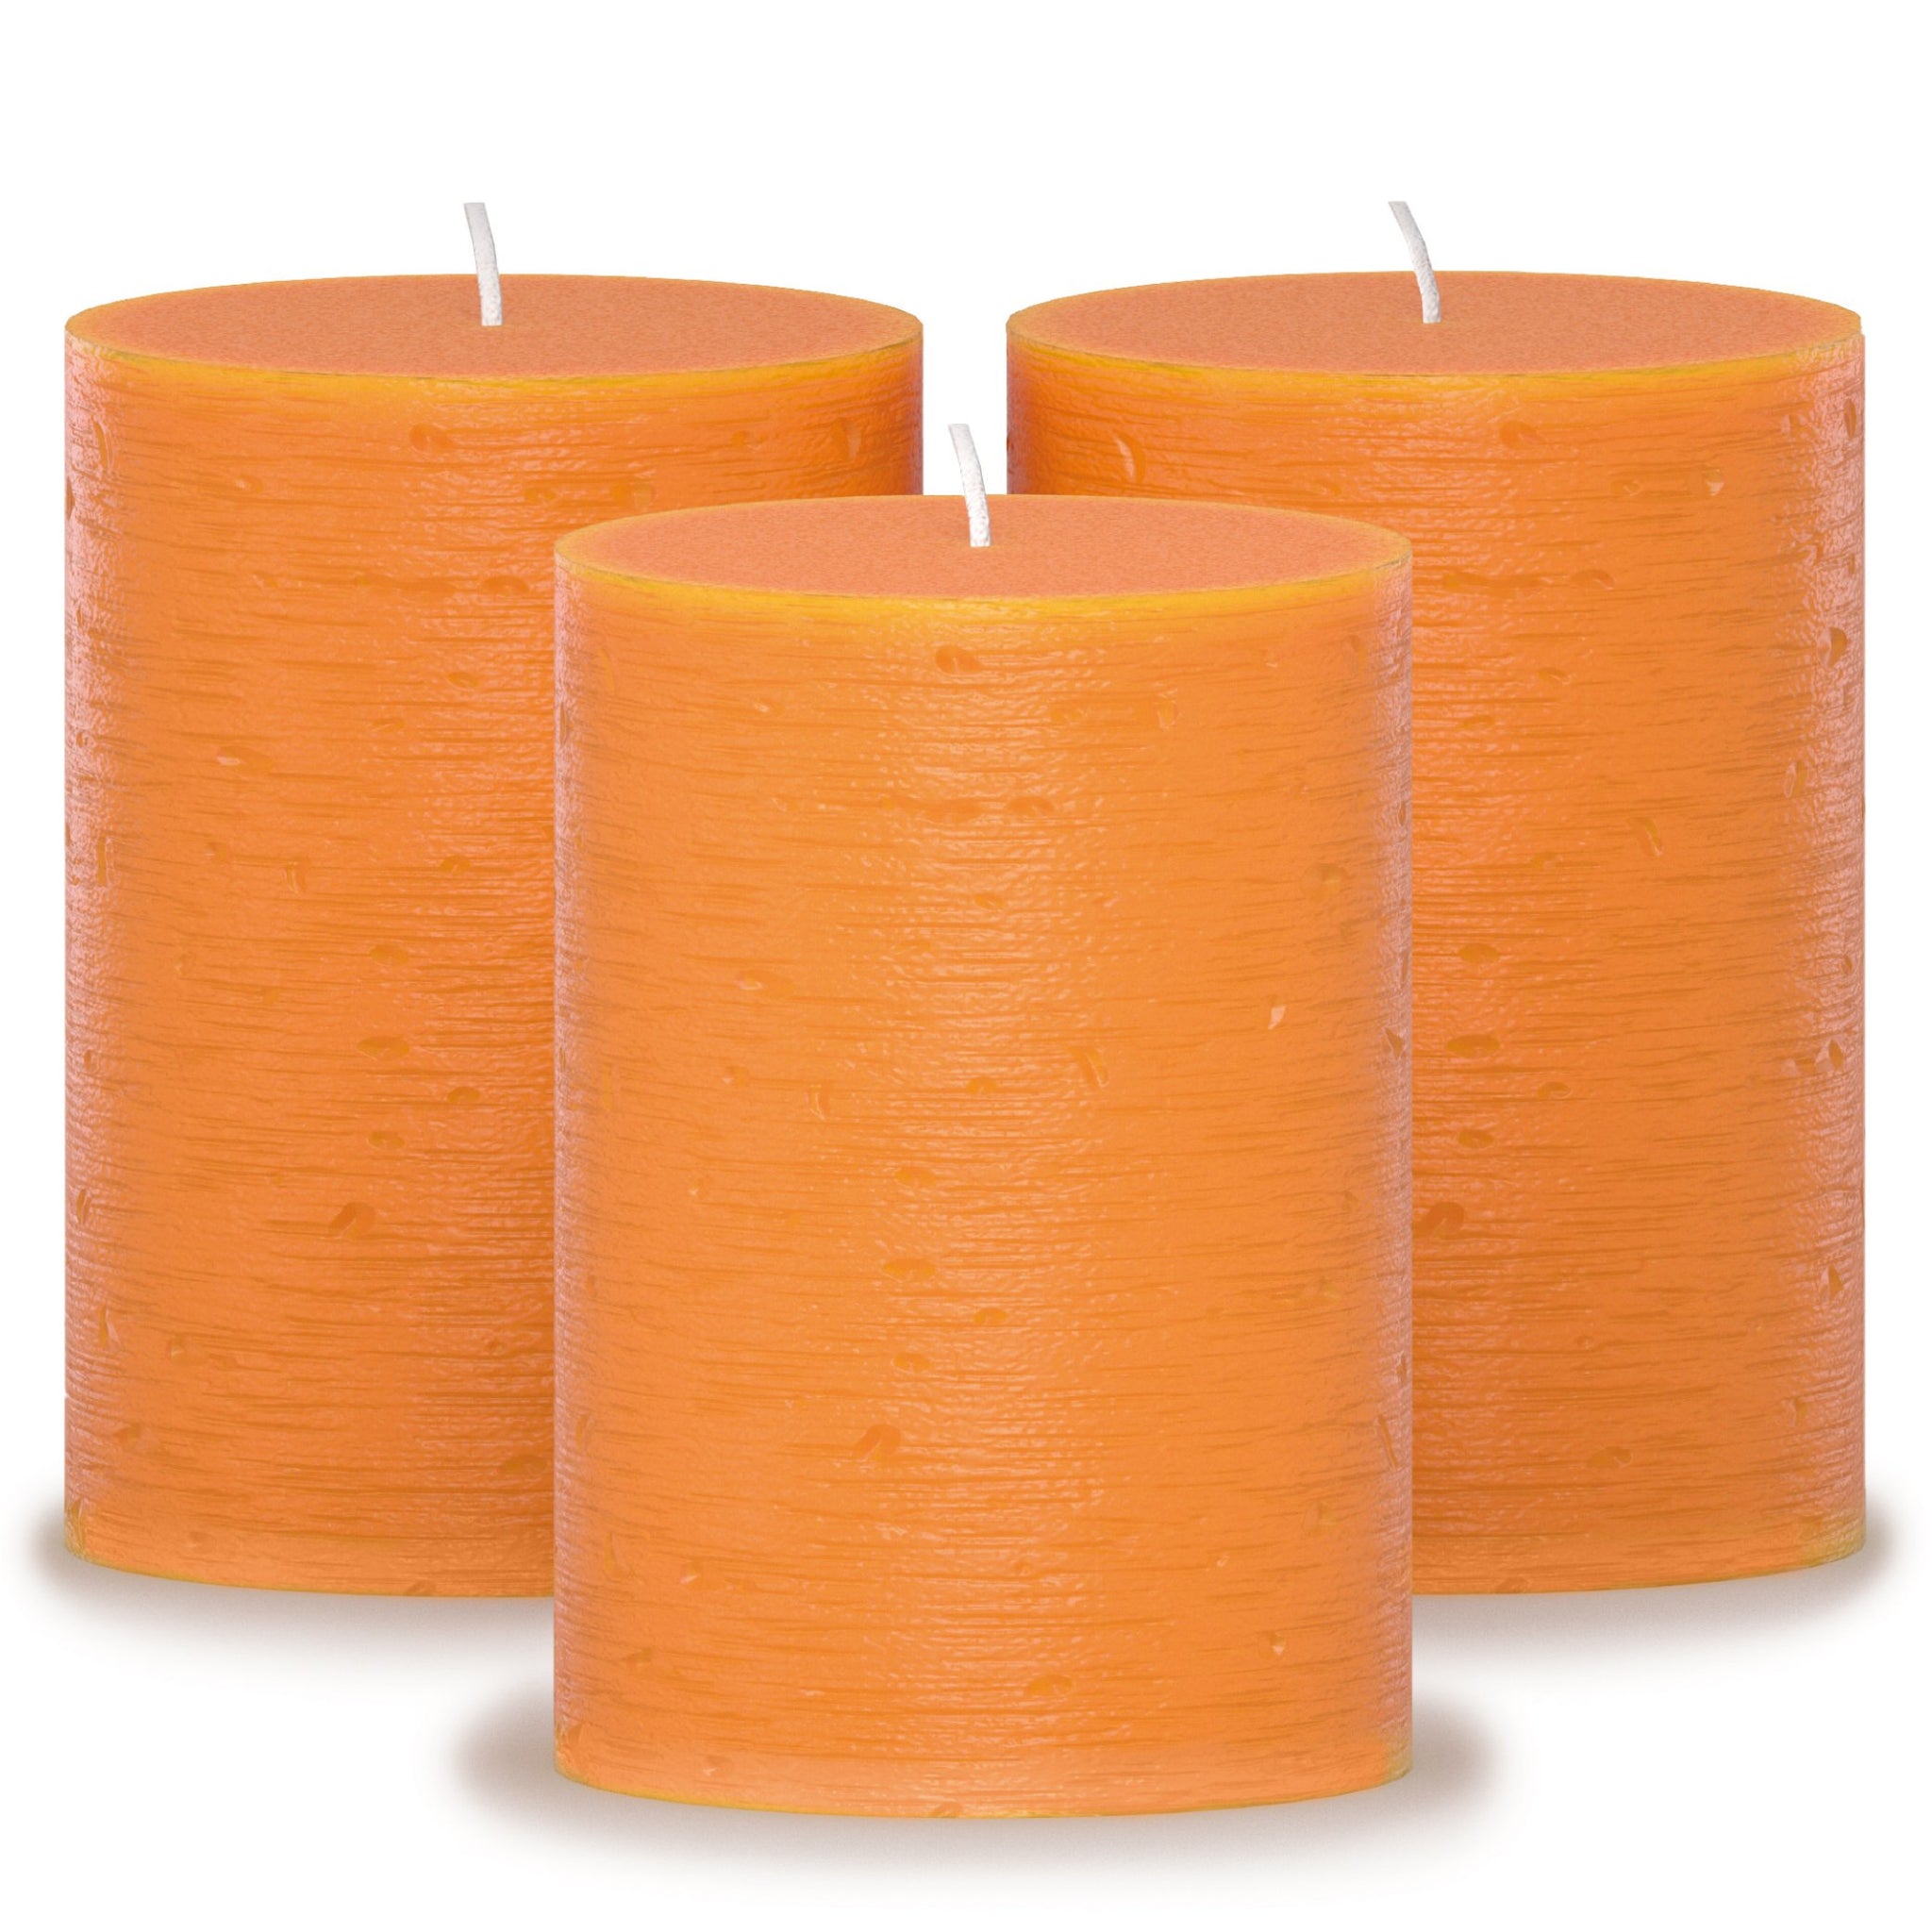 CANDWAX Orange Pillar Candles 3" - Set of 3pcs